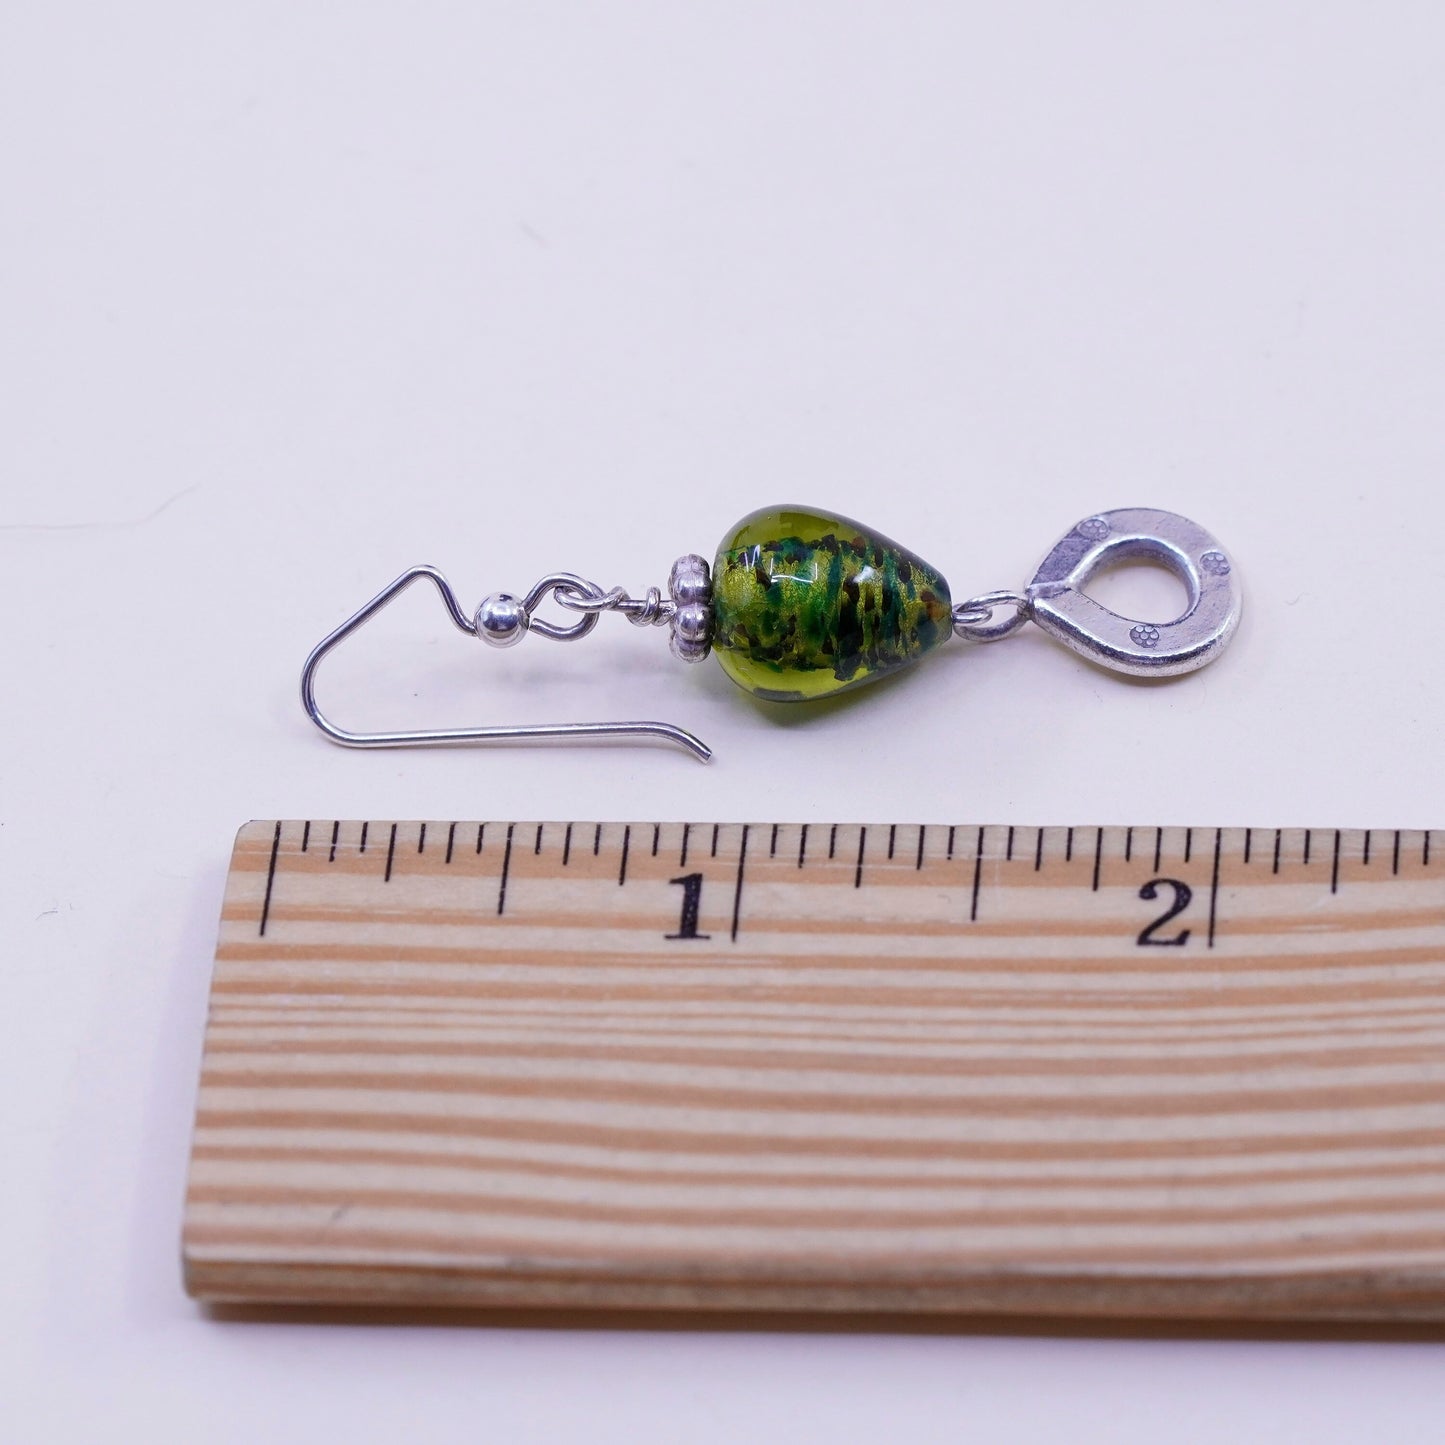 Vintage Sterling 925 silver handmade earrings with green teardrop glass dangles